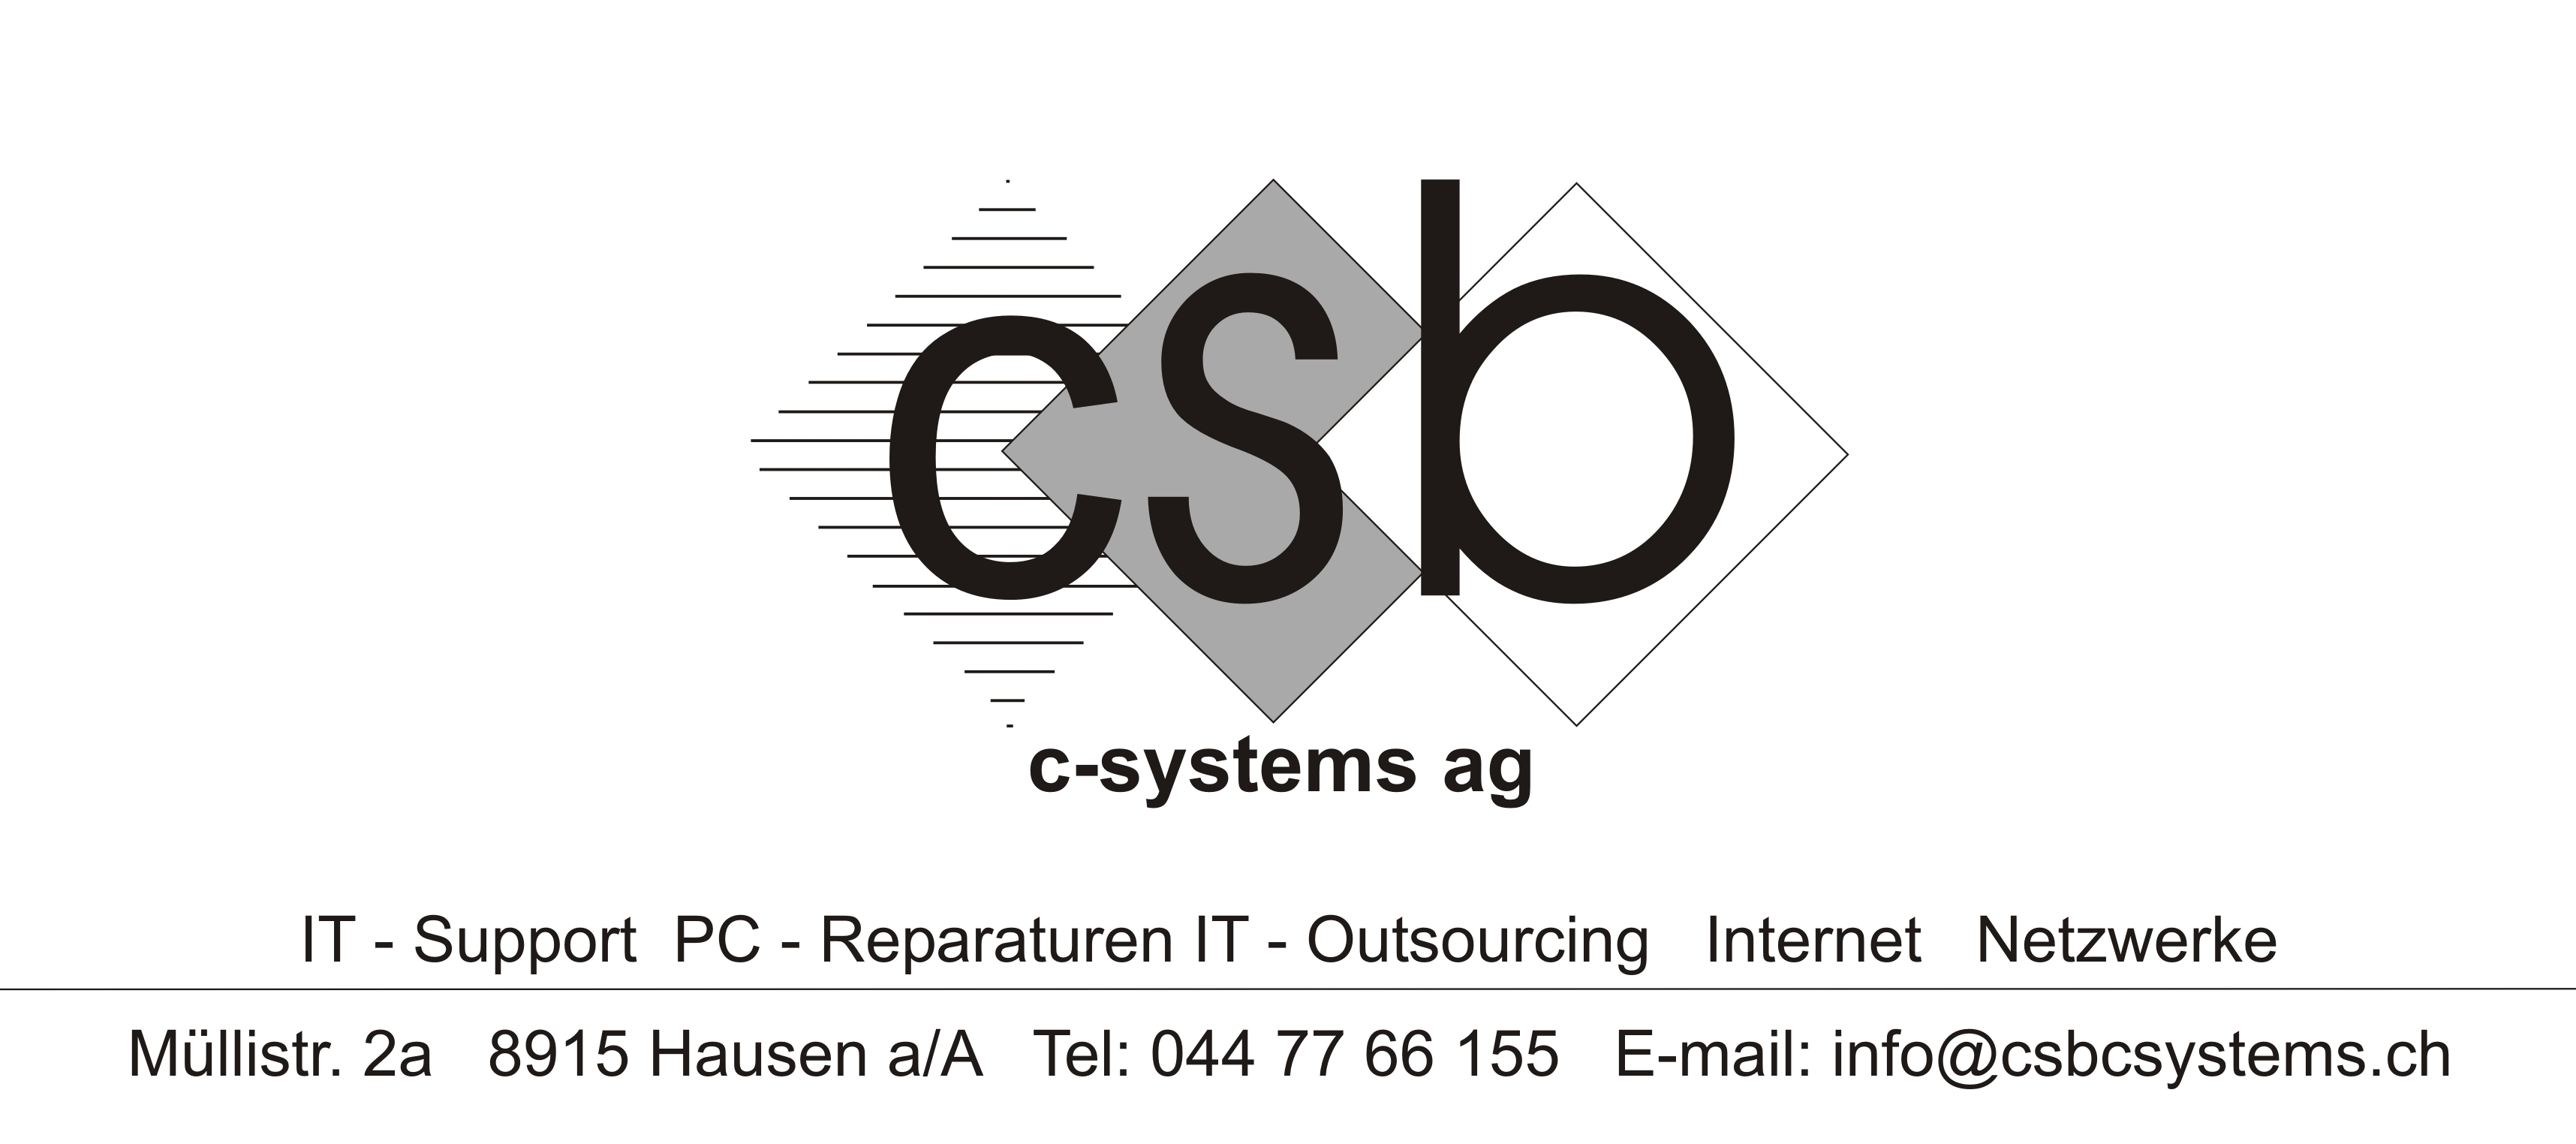 (c) Csbcsystems.ch